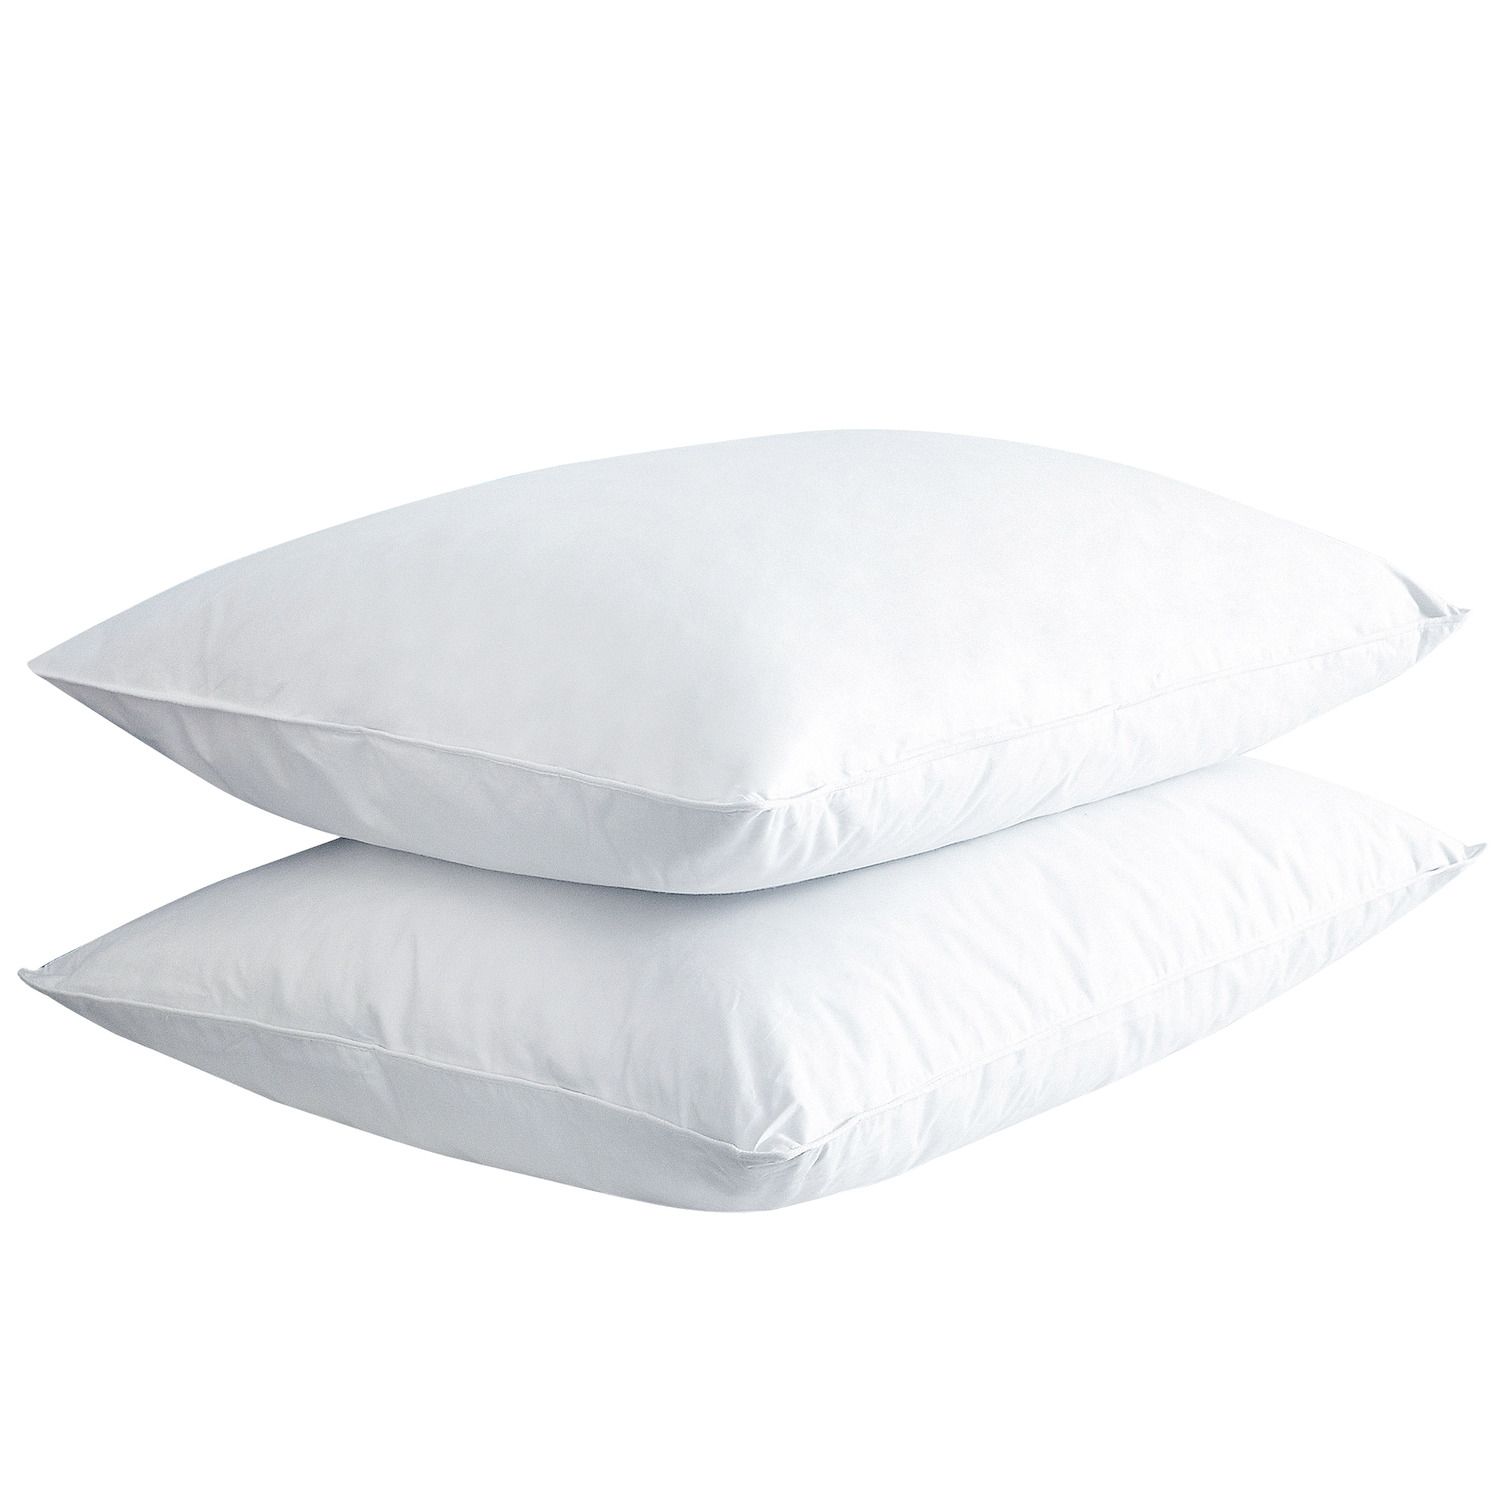 Image for Dream On White Goose Down Blend Pillow at Kohl's.